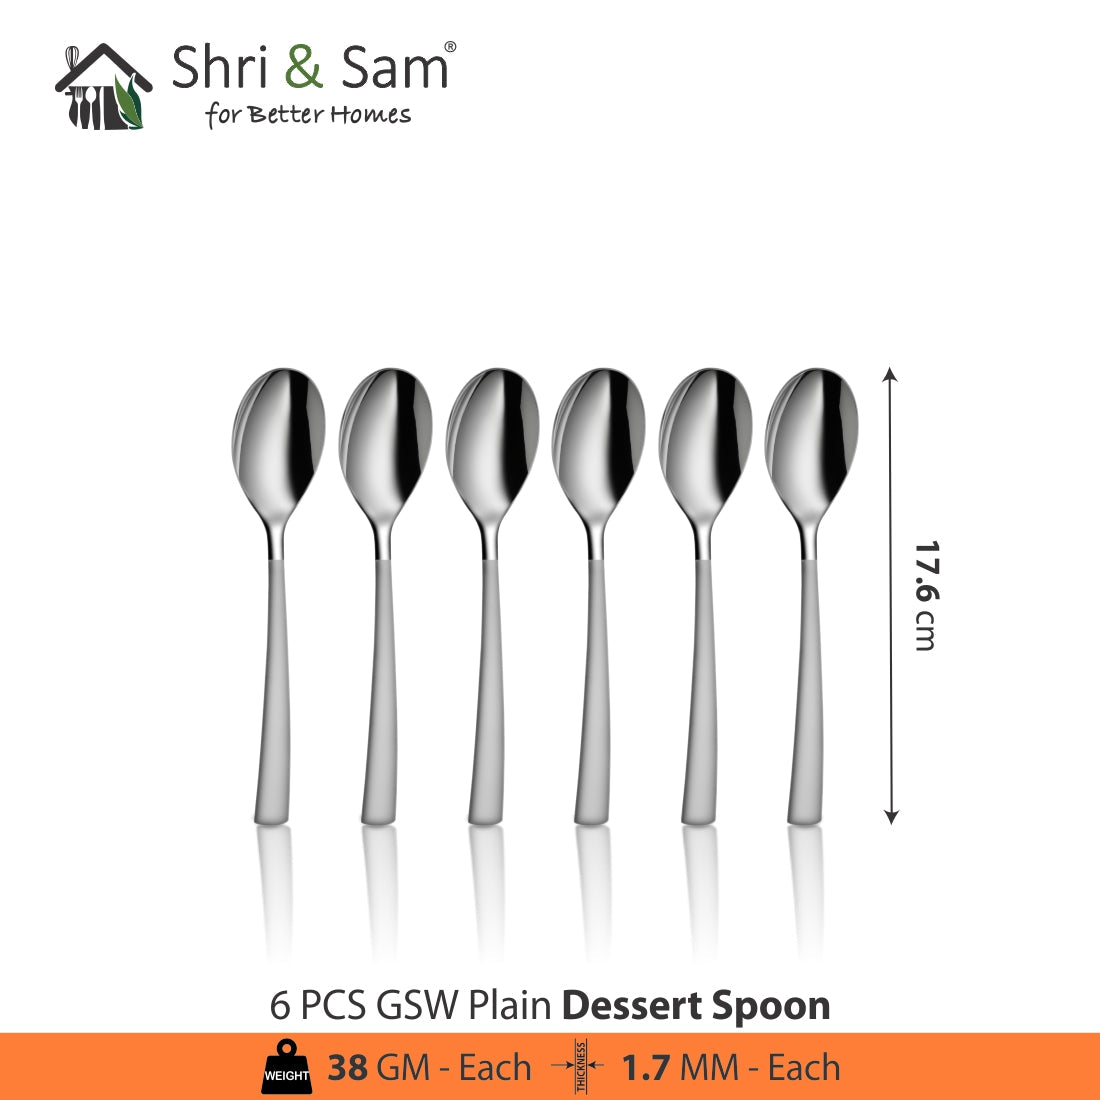 Stainless Steel 24 PCS Cutlery Set GSW Plain